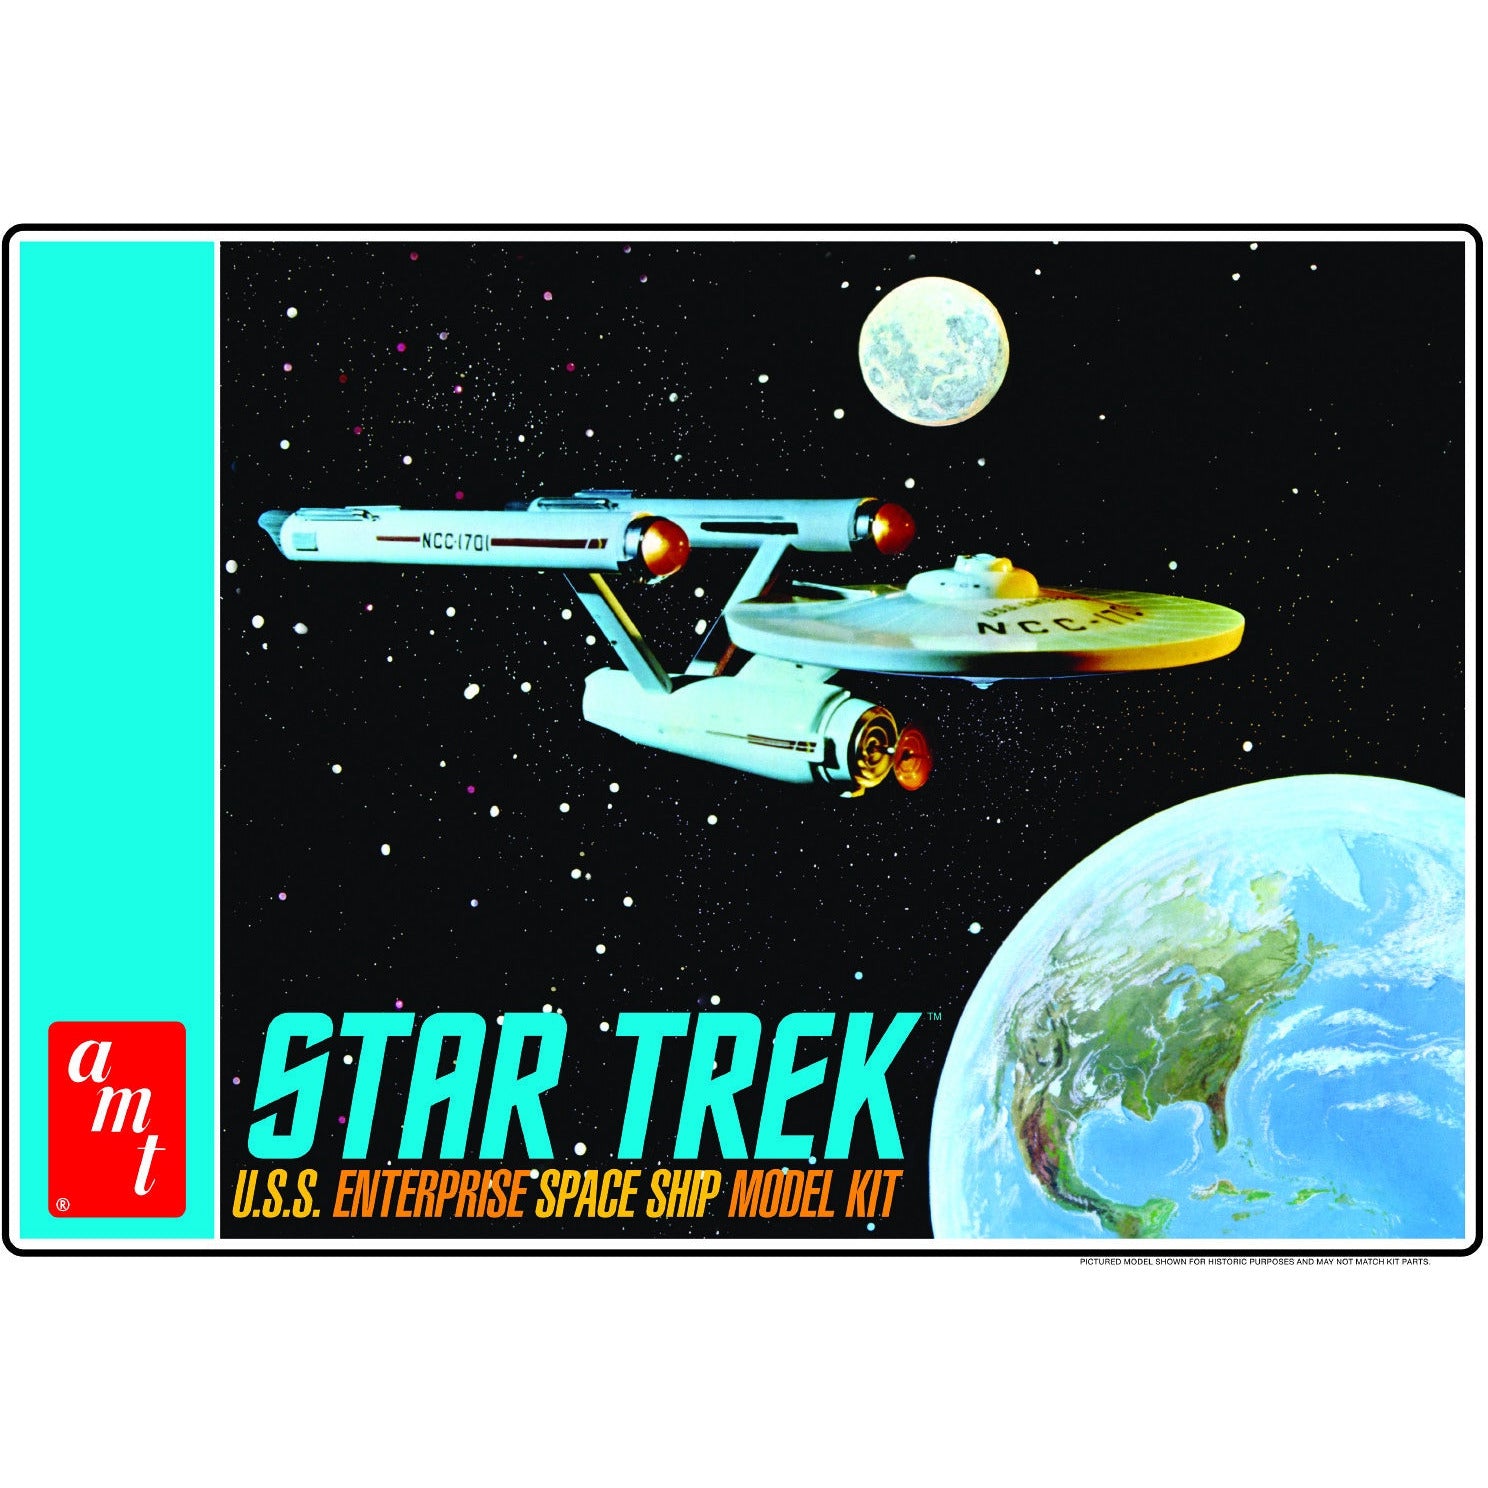 USS NC-1701 Enterprise 1/650 Classic Star Trek Model Kit #1296 by AMT